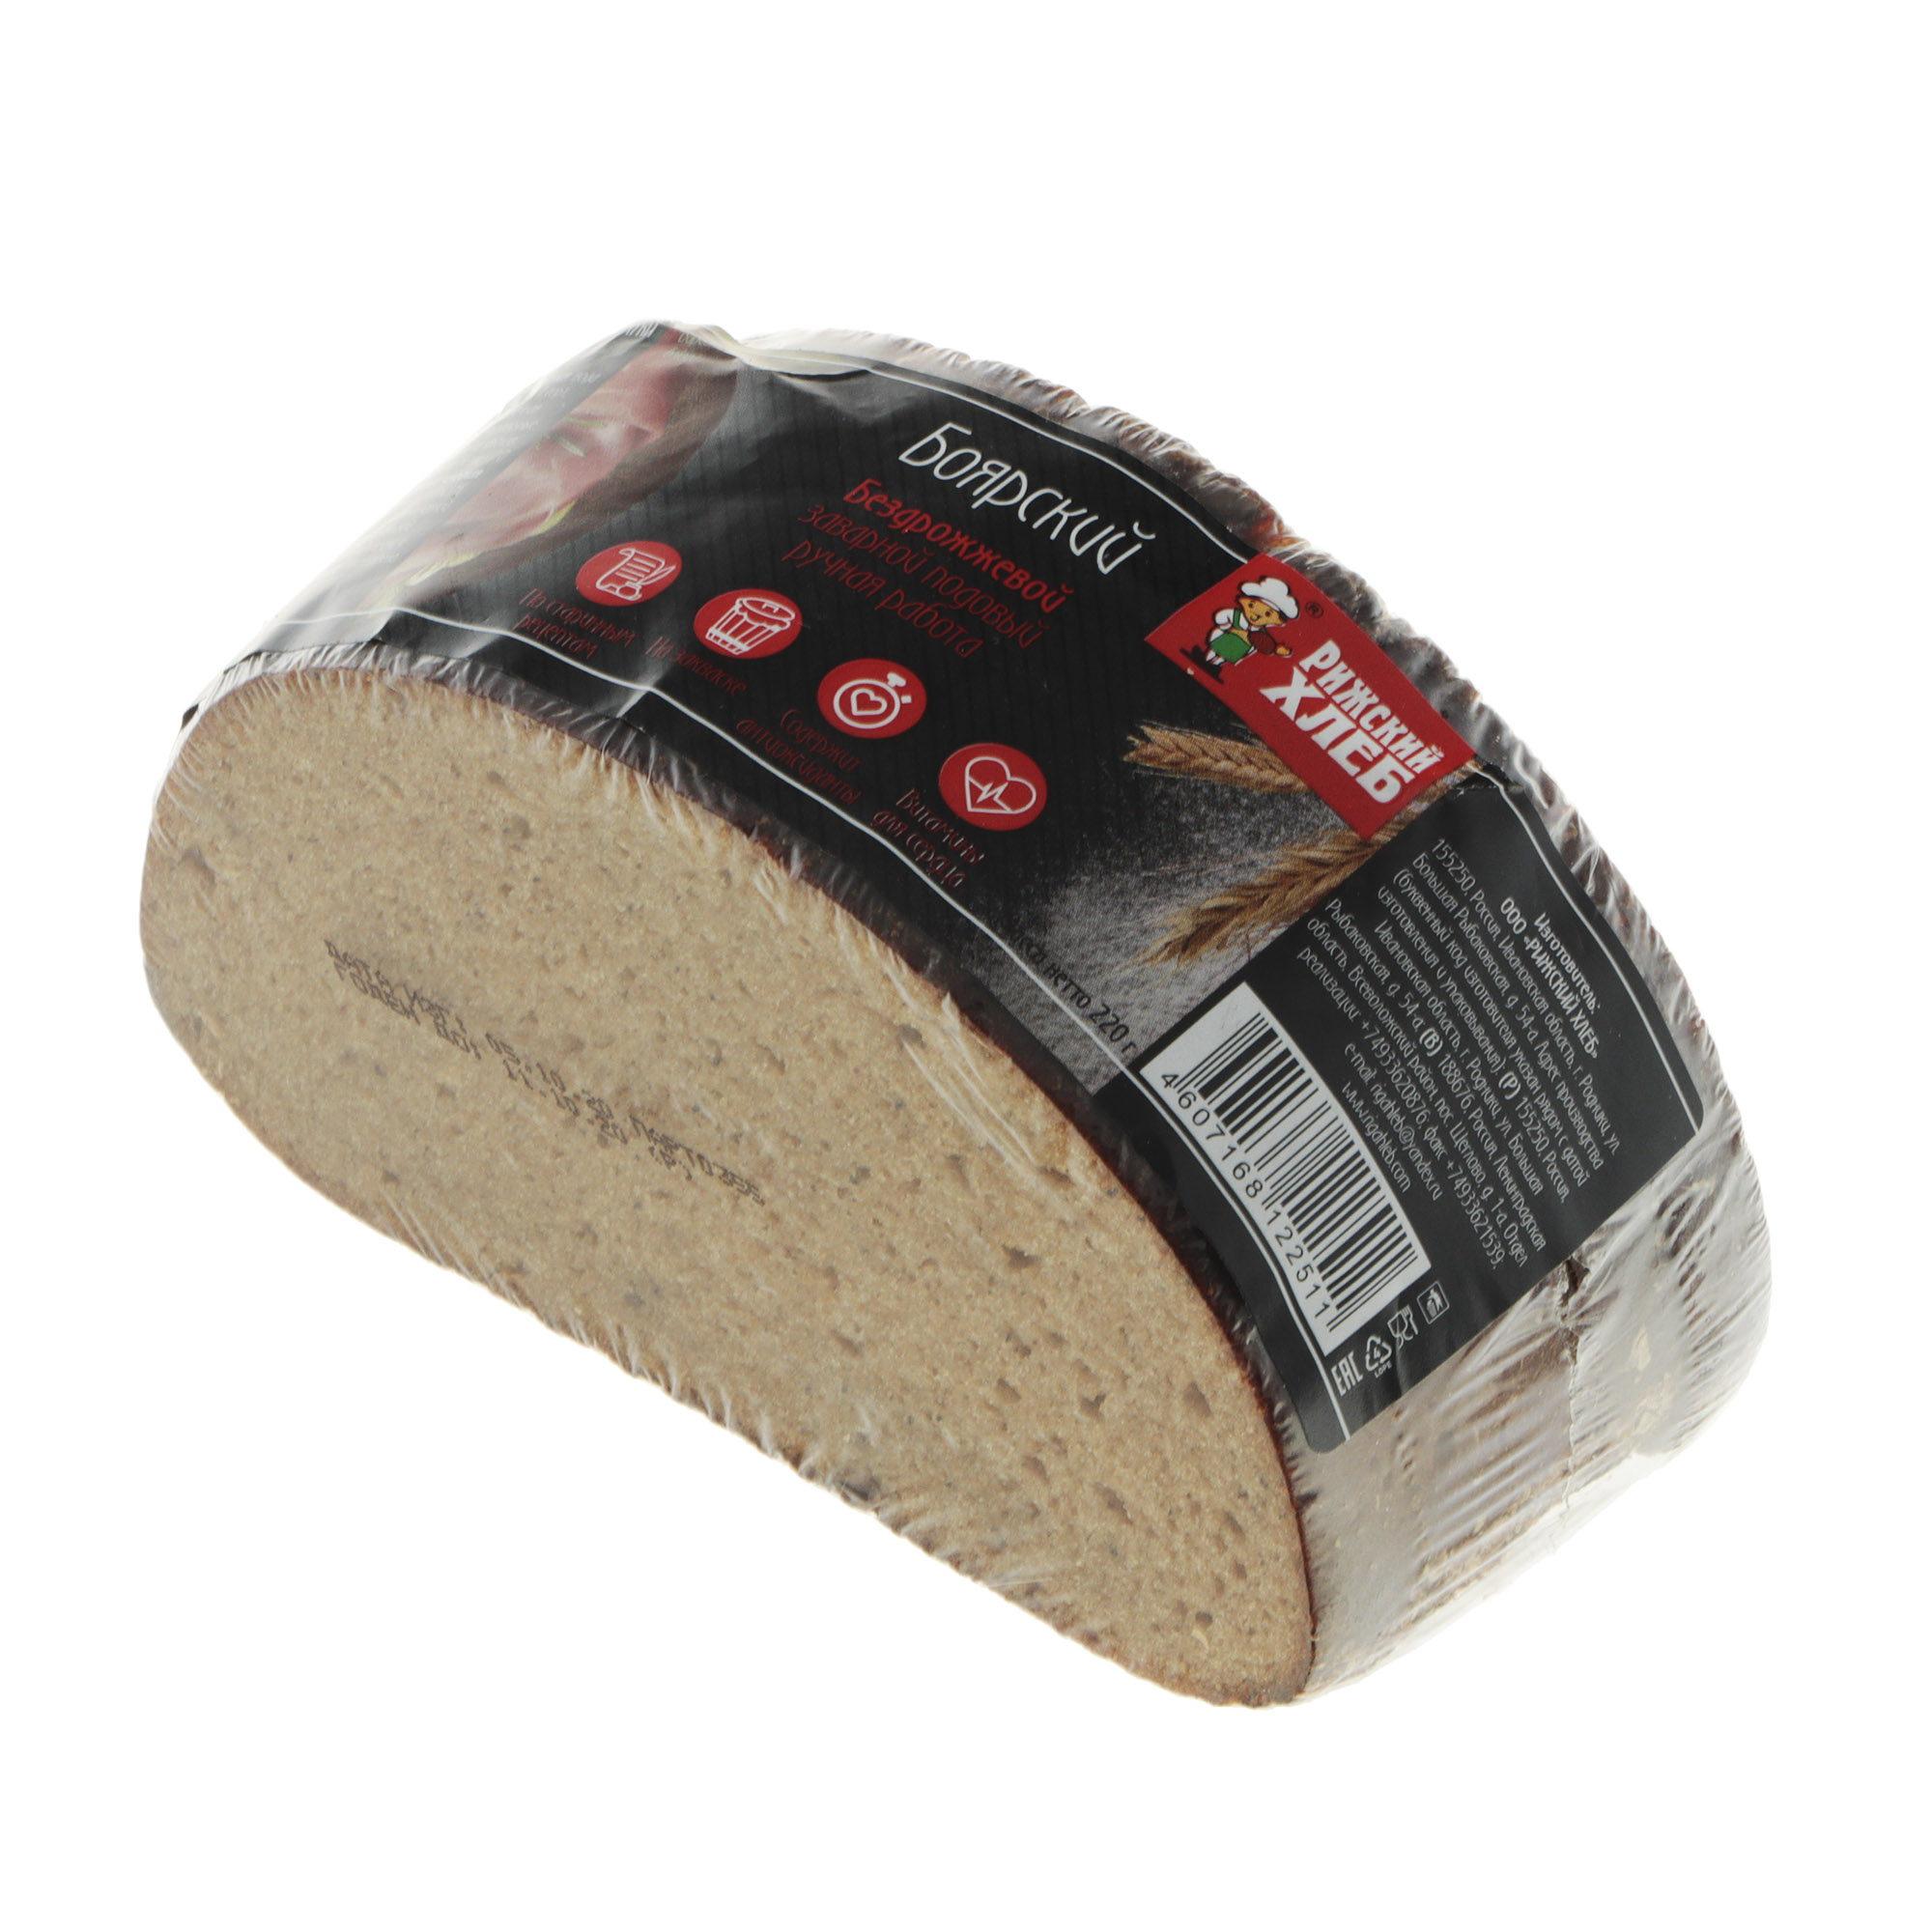 Хлеб Рижский хлеб боярский 220 г хлеб рижский хлеб ржаной со злаками бездрожжевой 300 г